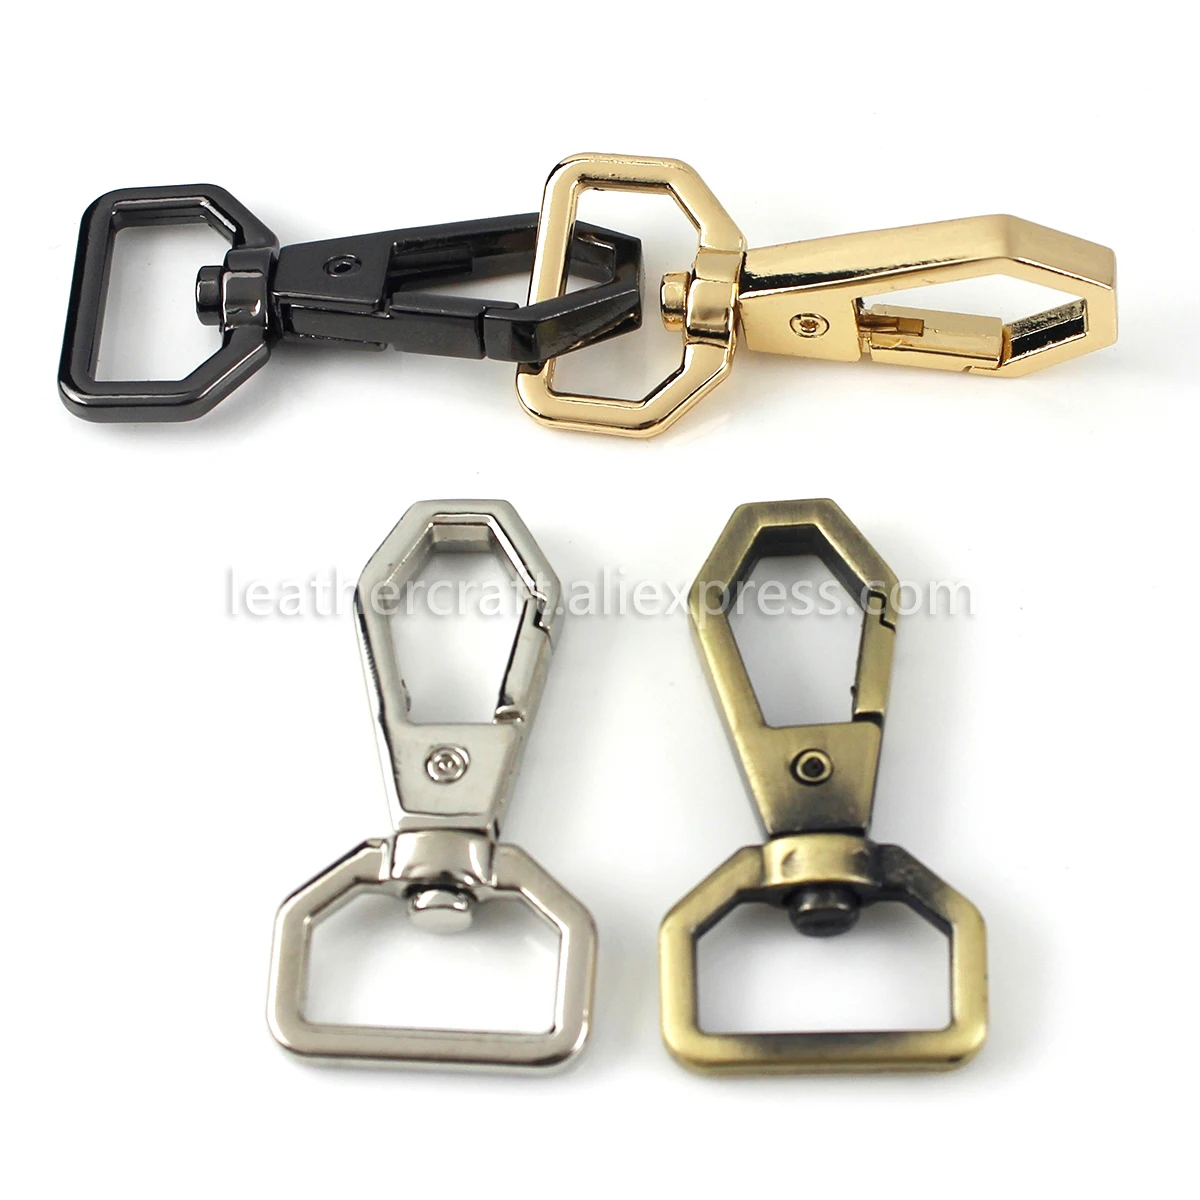 1x Metal Polygonal Swivel Trigger Snap Hook Spring Gate Clasps Clips Leather Belt Pet Leash Bag Strap Webbing Keychain Hooks images - 6